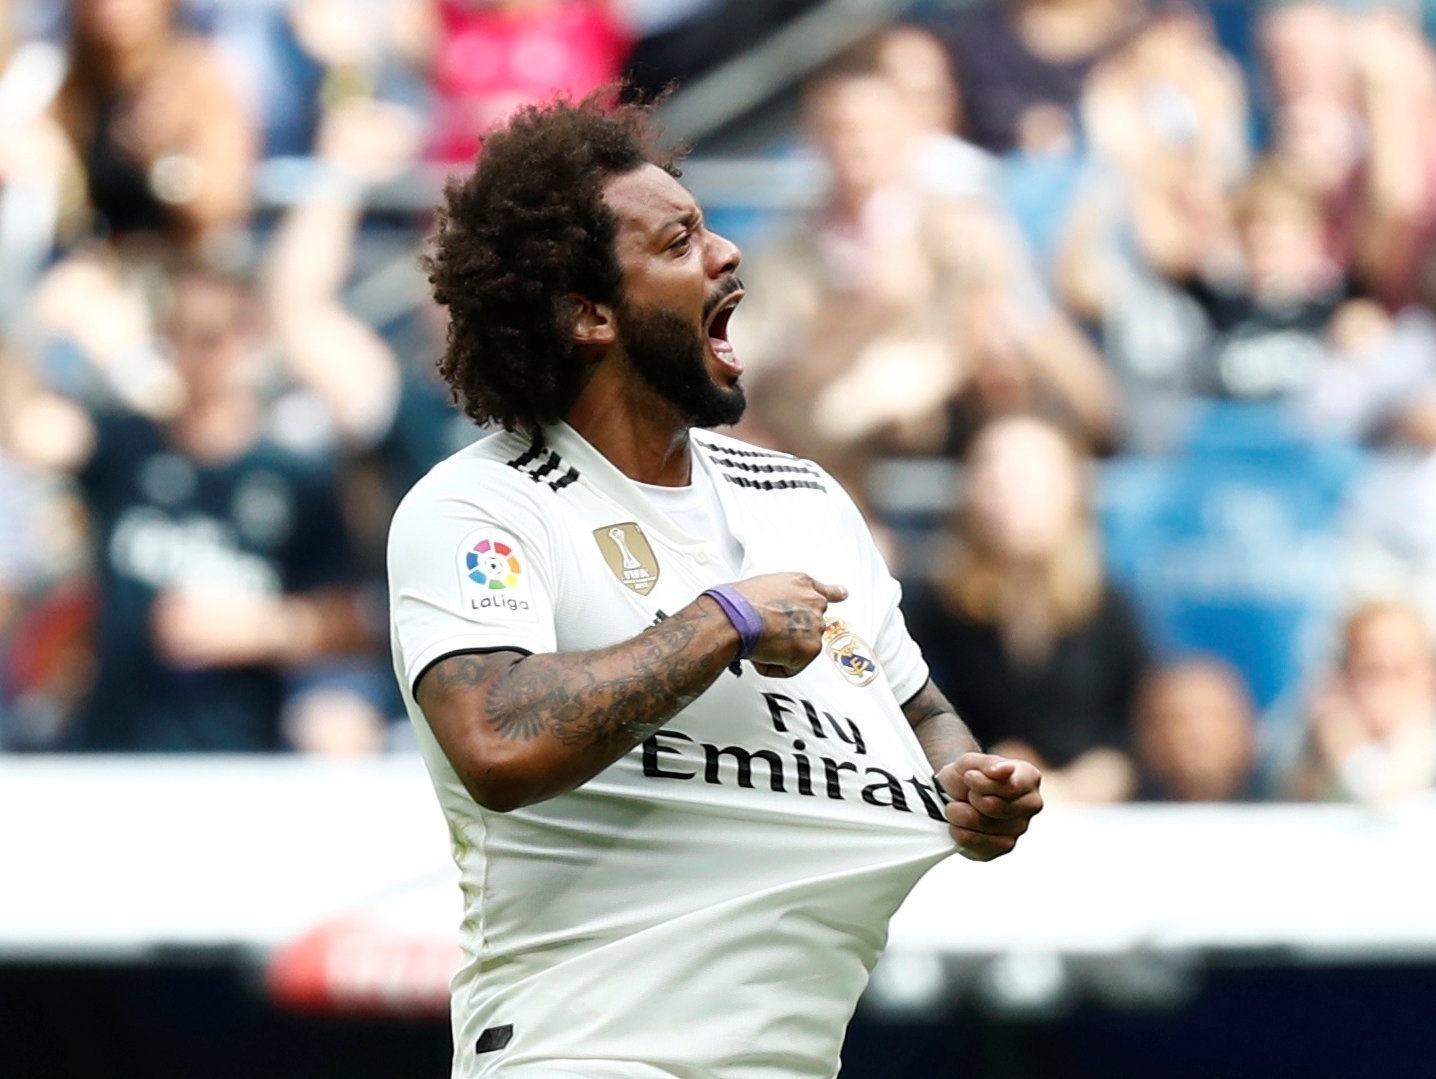 Marcelo no Real Madrid: os títulos, gols, assistências e recordes do  lateral